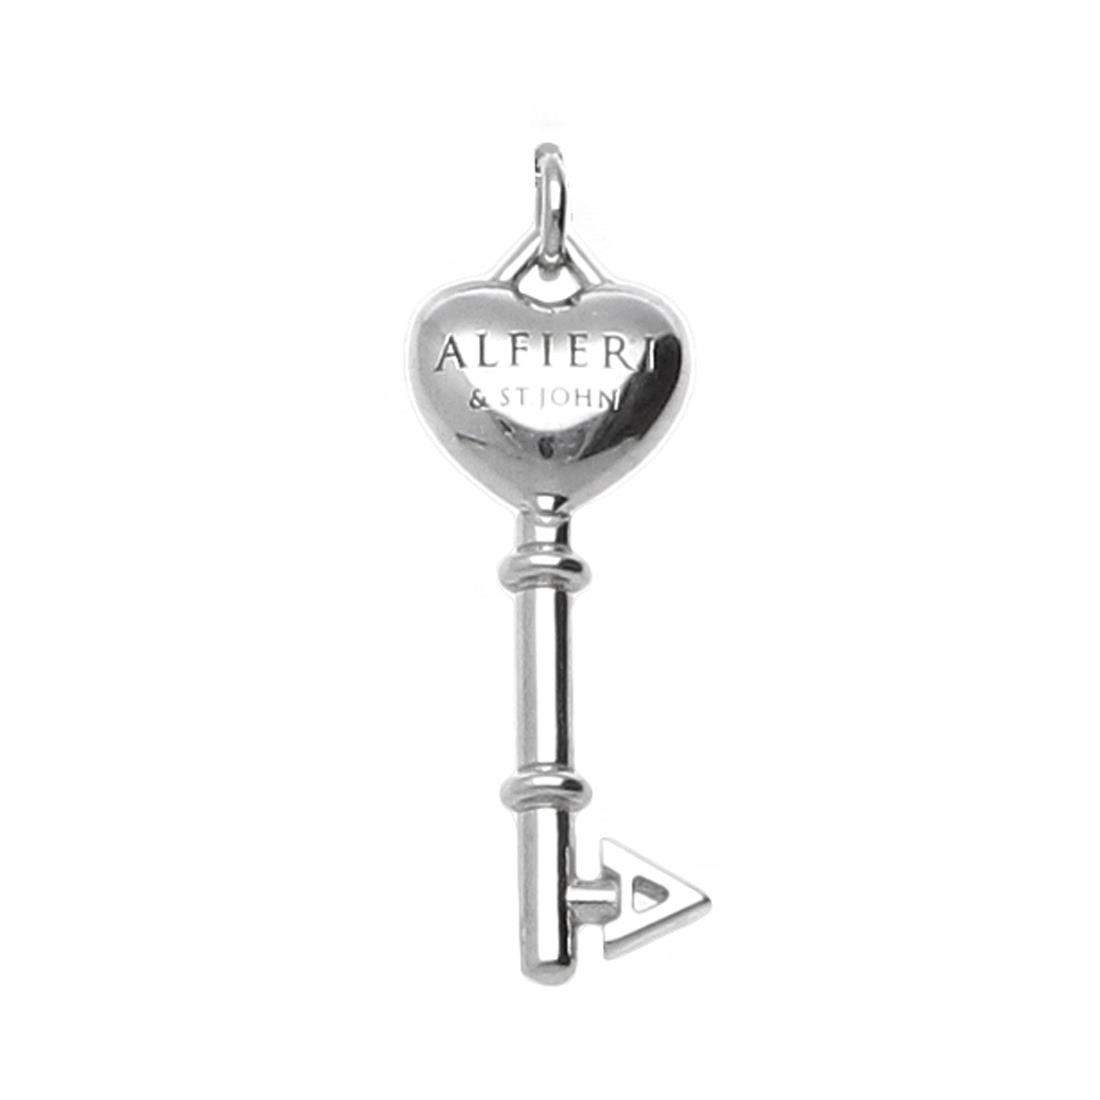 Silver key pendant - ALFIERI & ST. JOHN 925